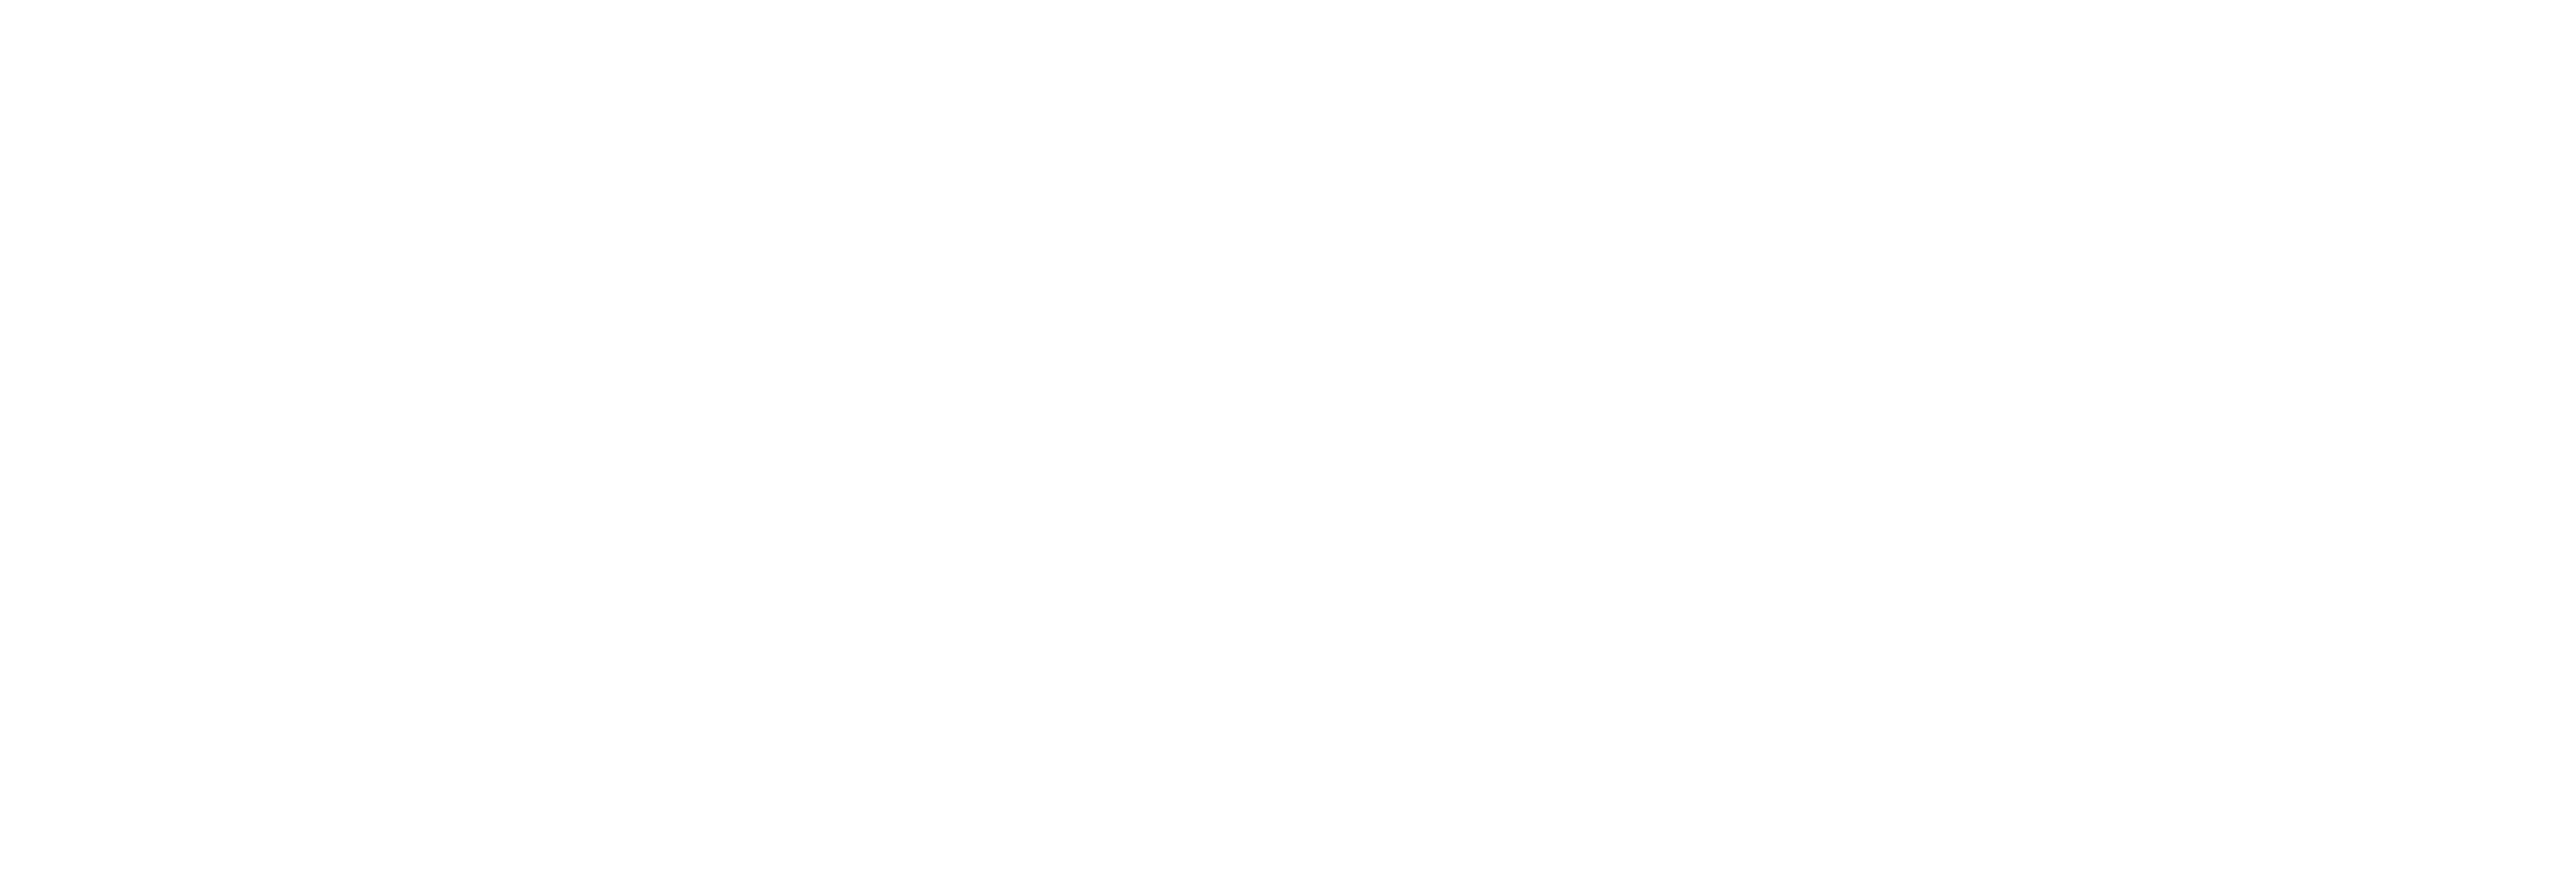 AF Studio Aziendale Vivere sul Garda: Verona - Lago di Garda - Trento